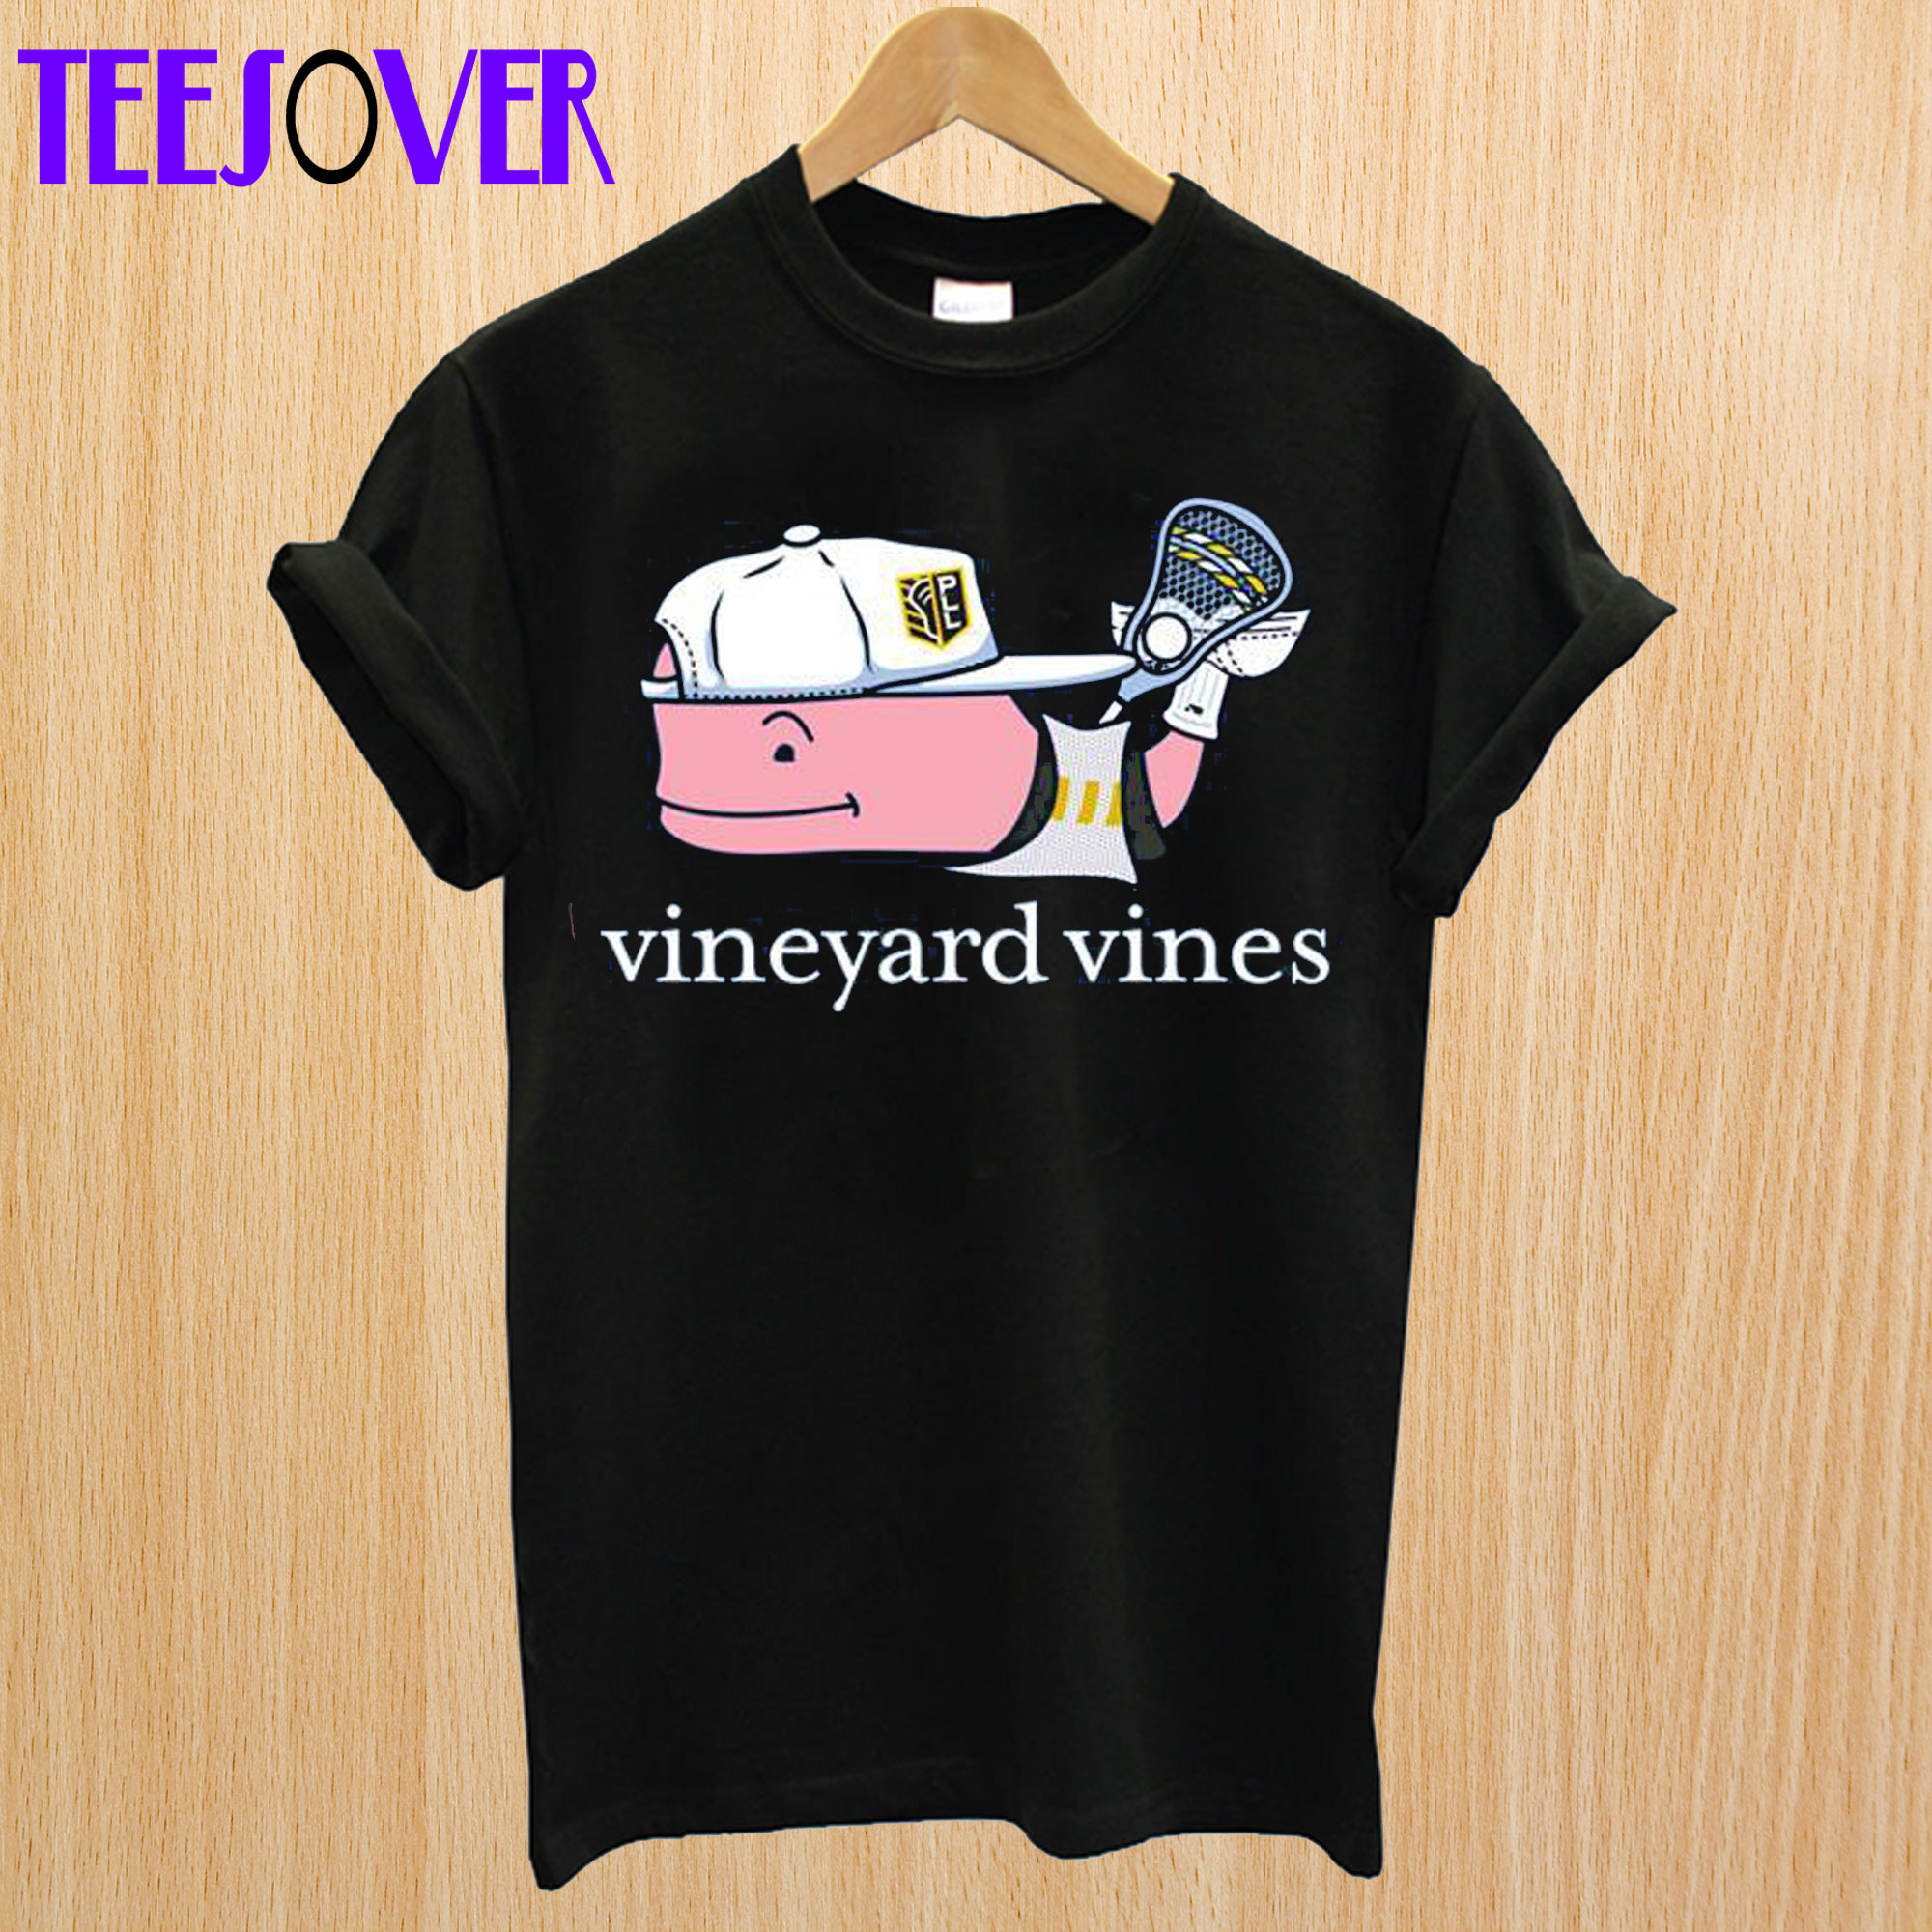 Vineyard vines T-Shirt